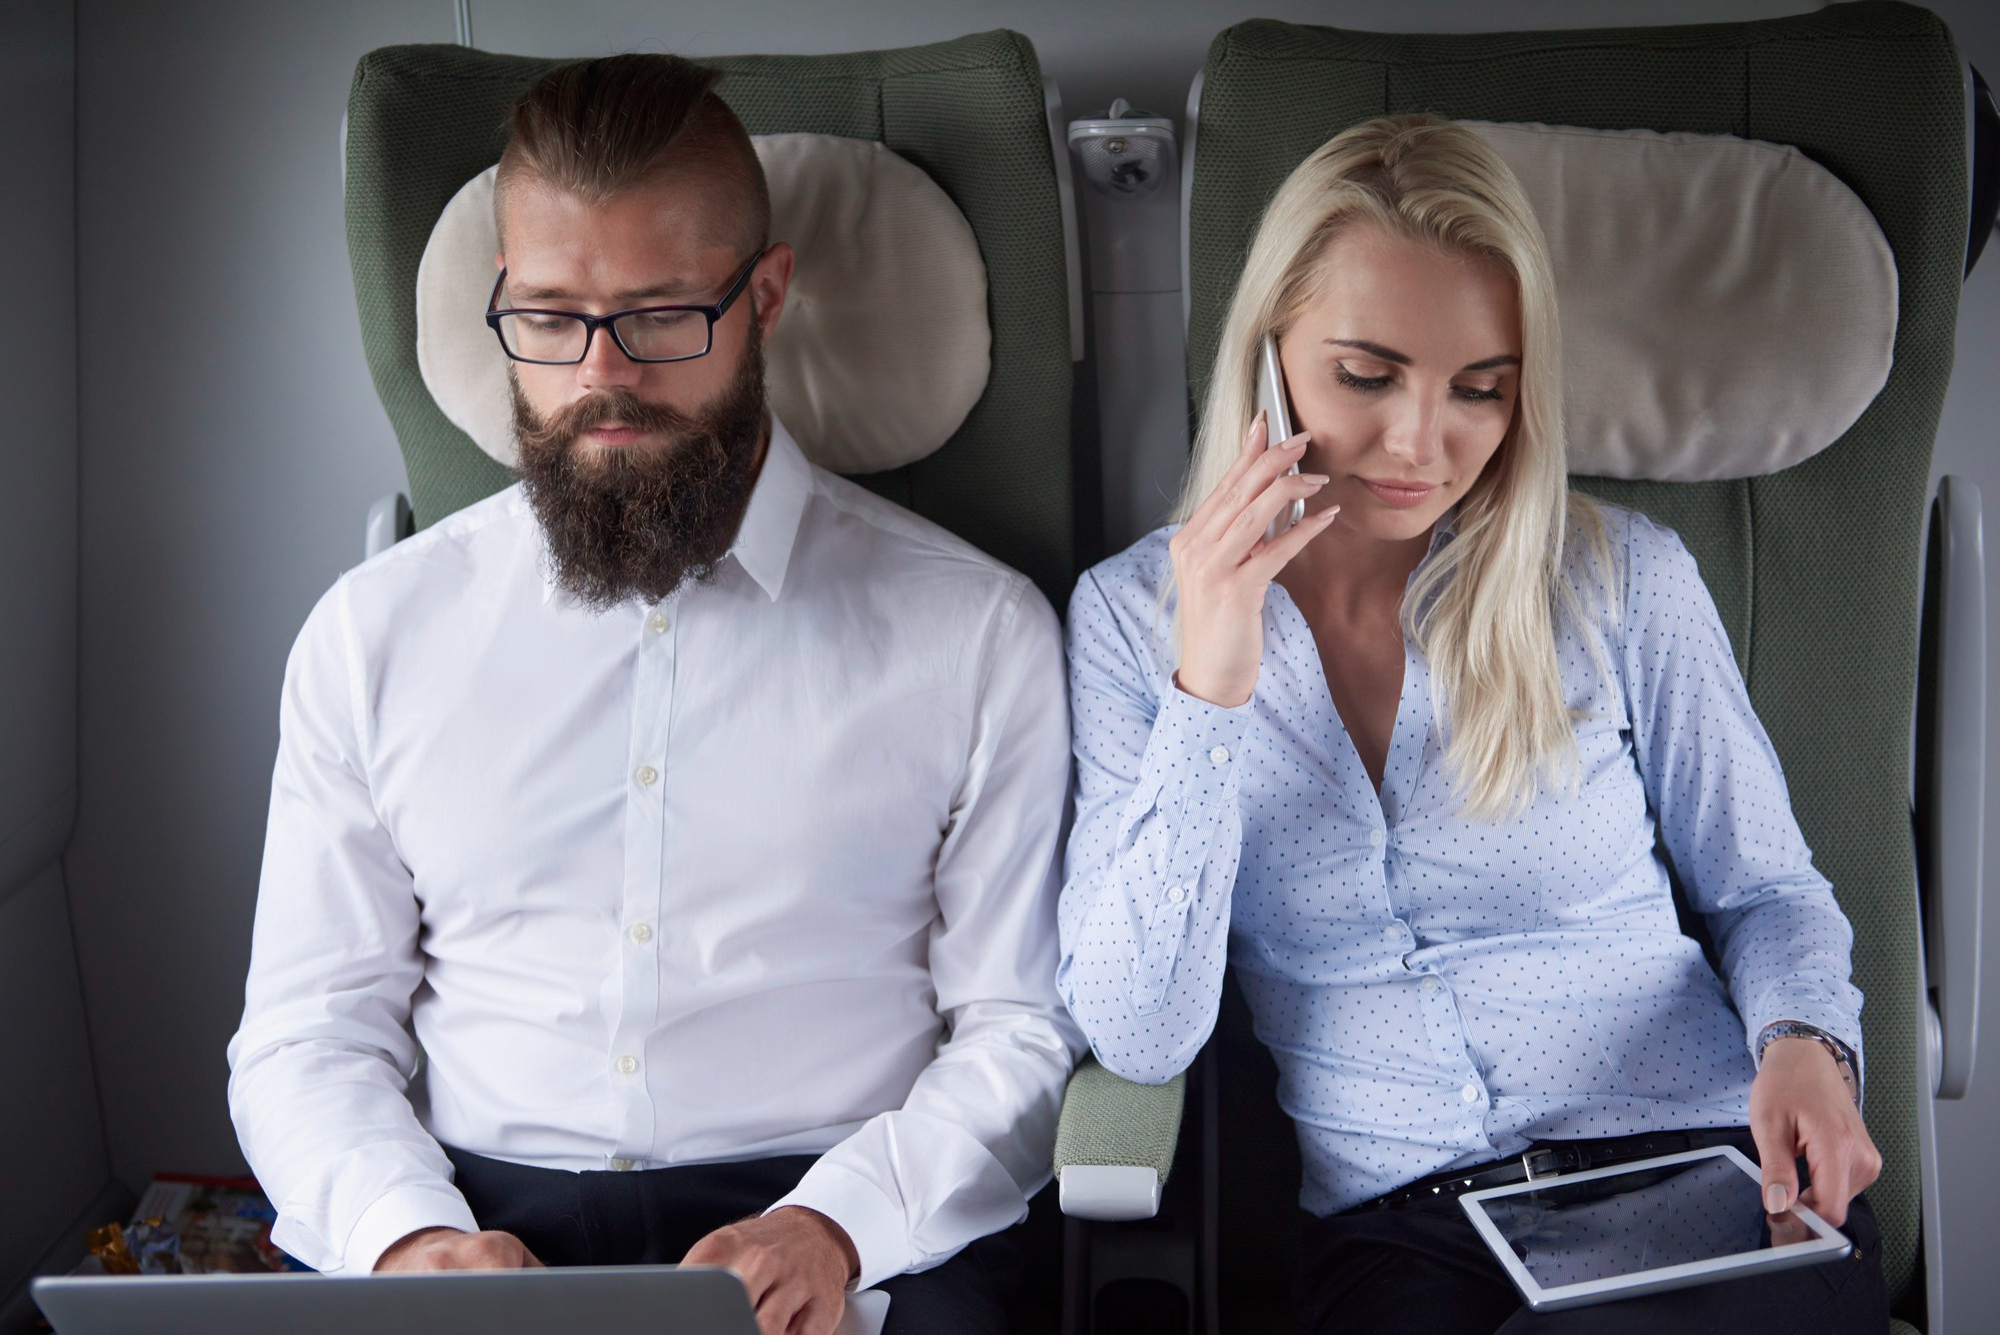 A woman on a phone seated next to a man on a plane | Source: Freepik